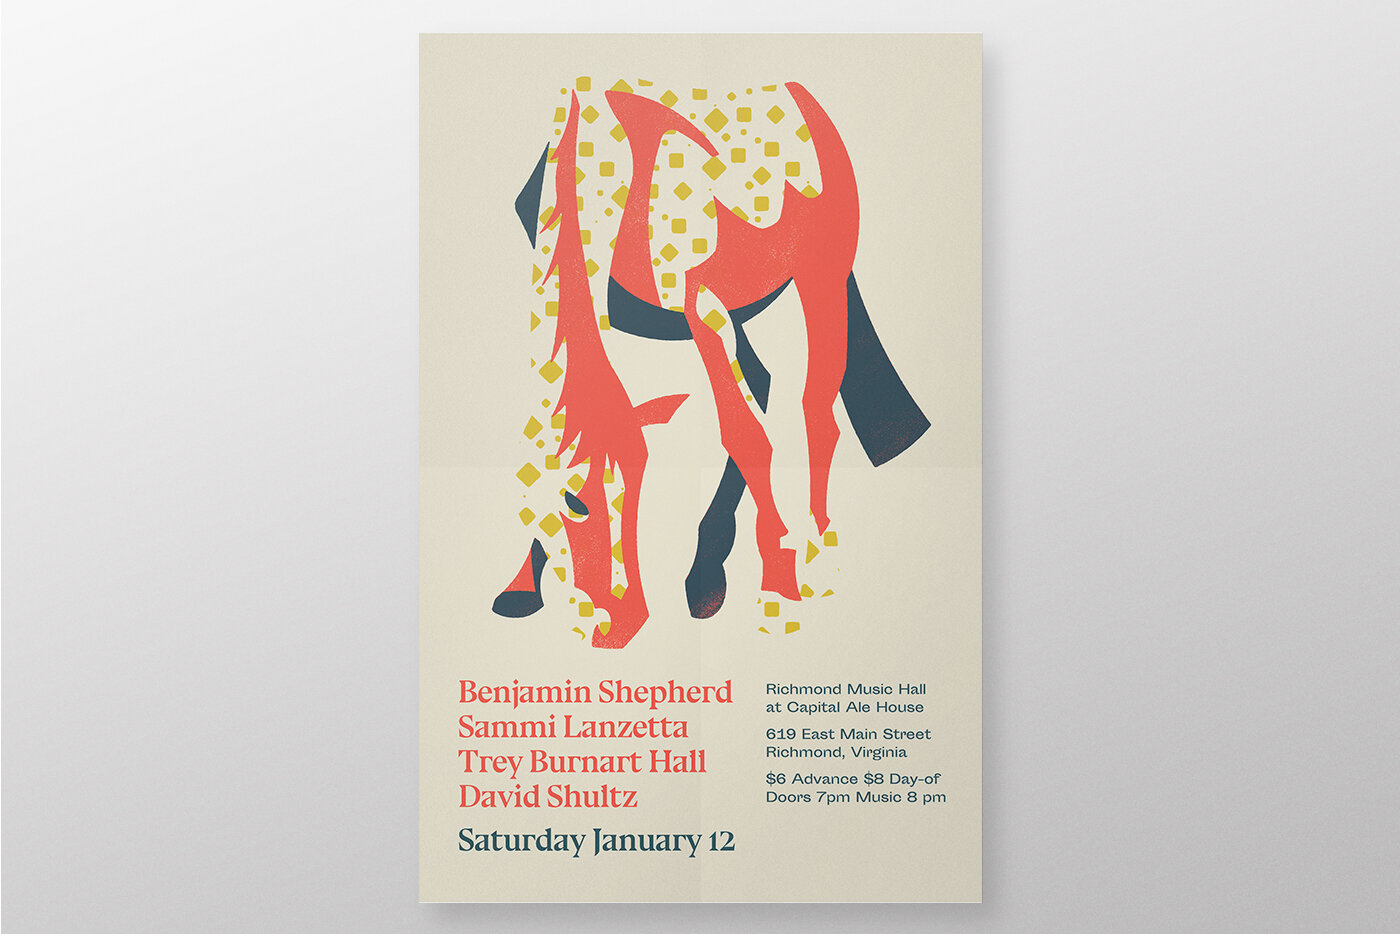 Richmond Music Hall Poster Design